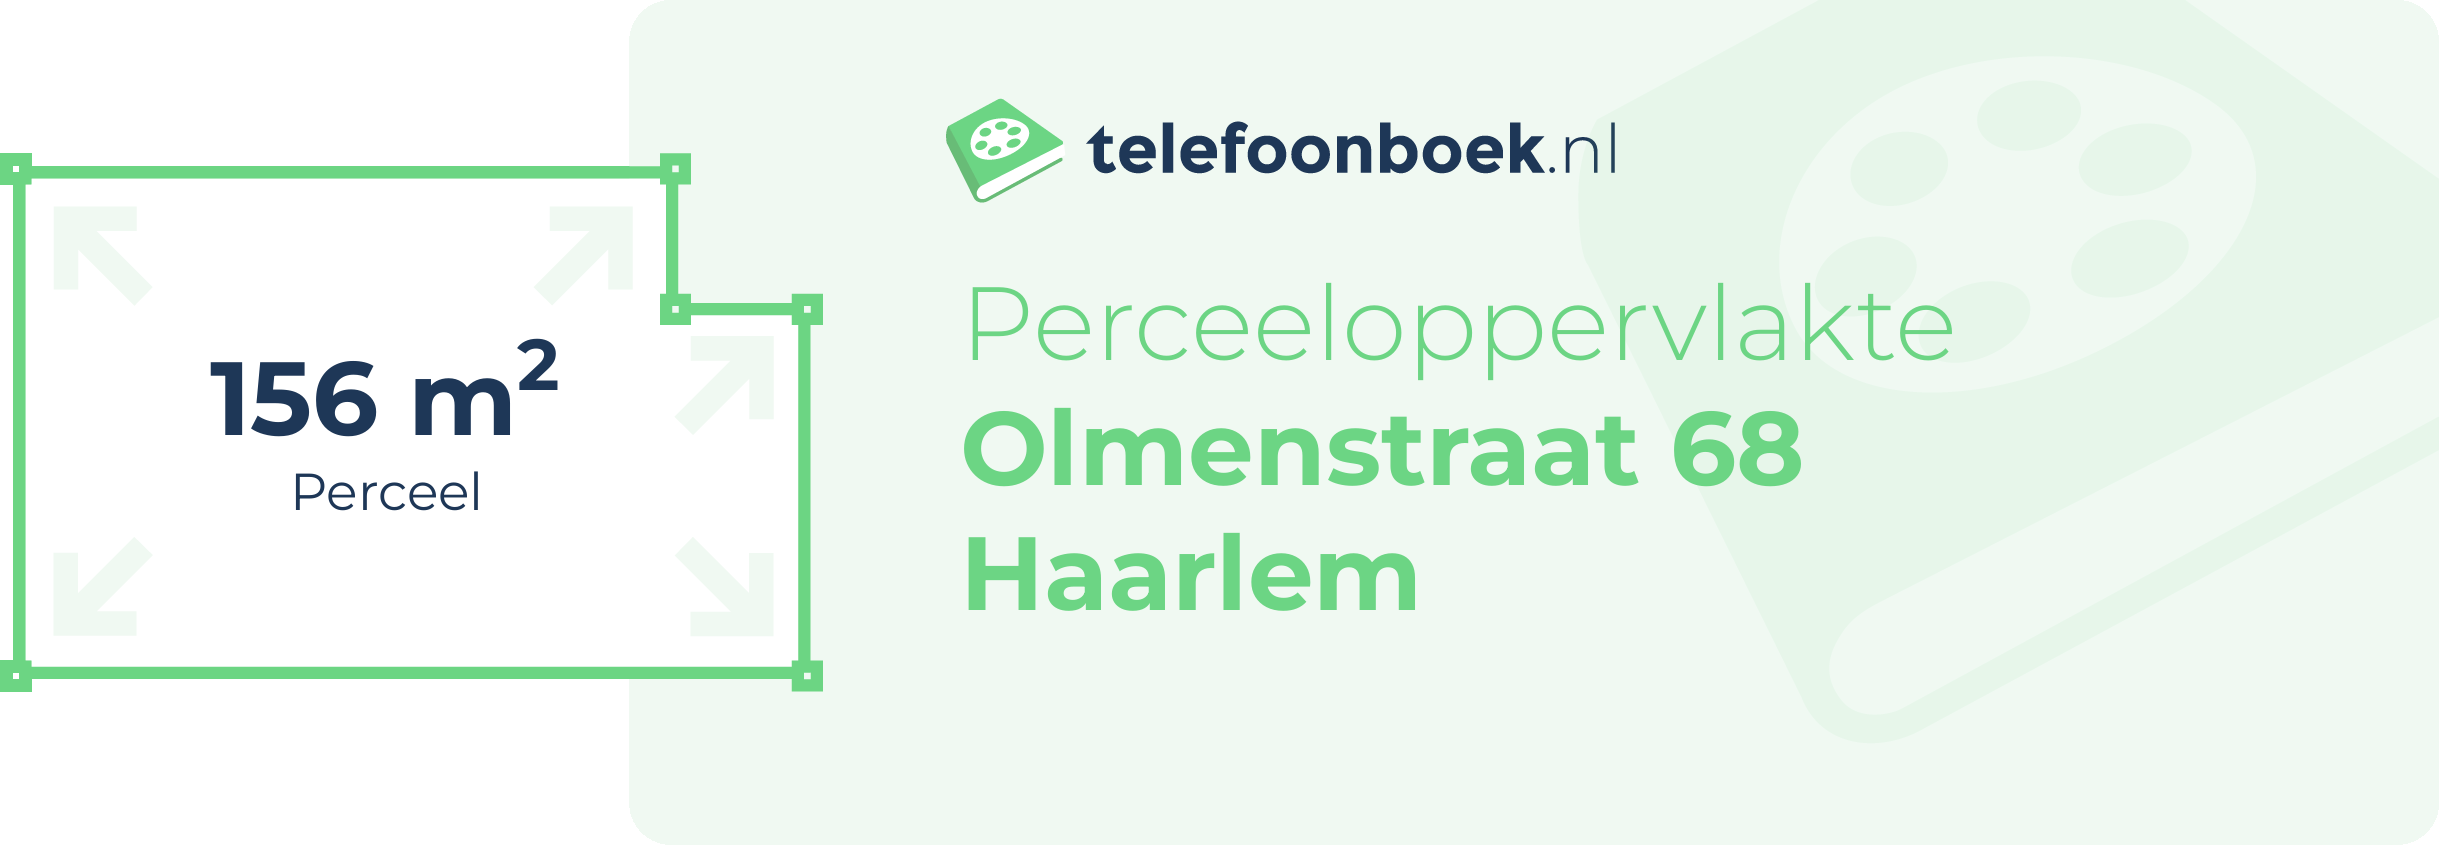 Perceeloppervlakte Olmenstraat 68 Haarlem